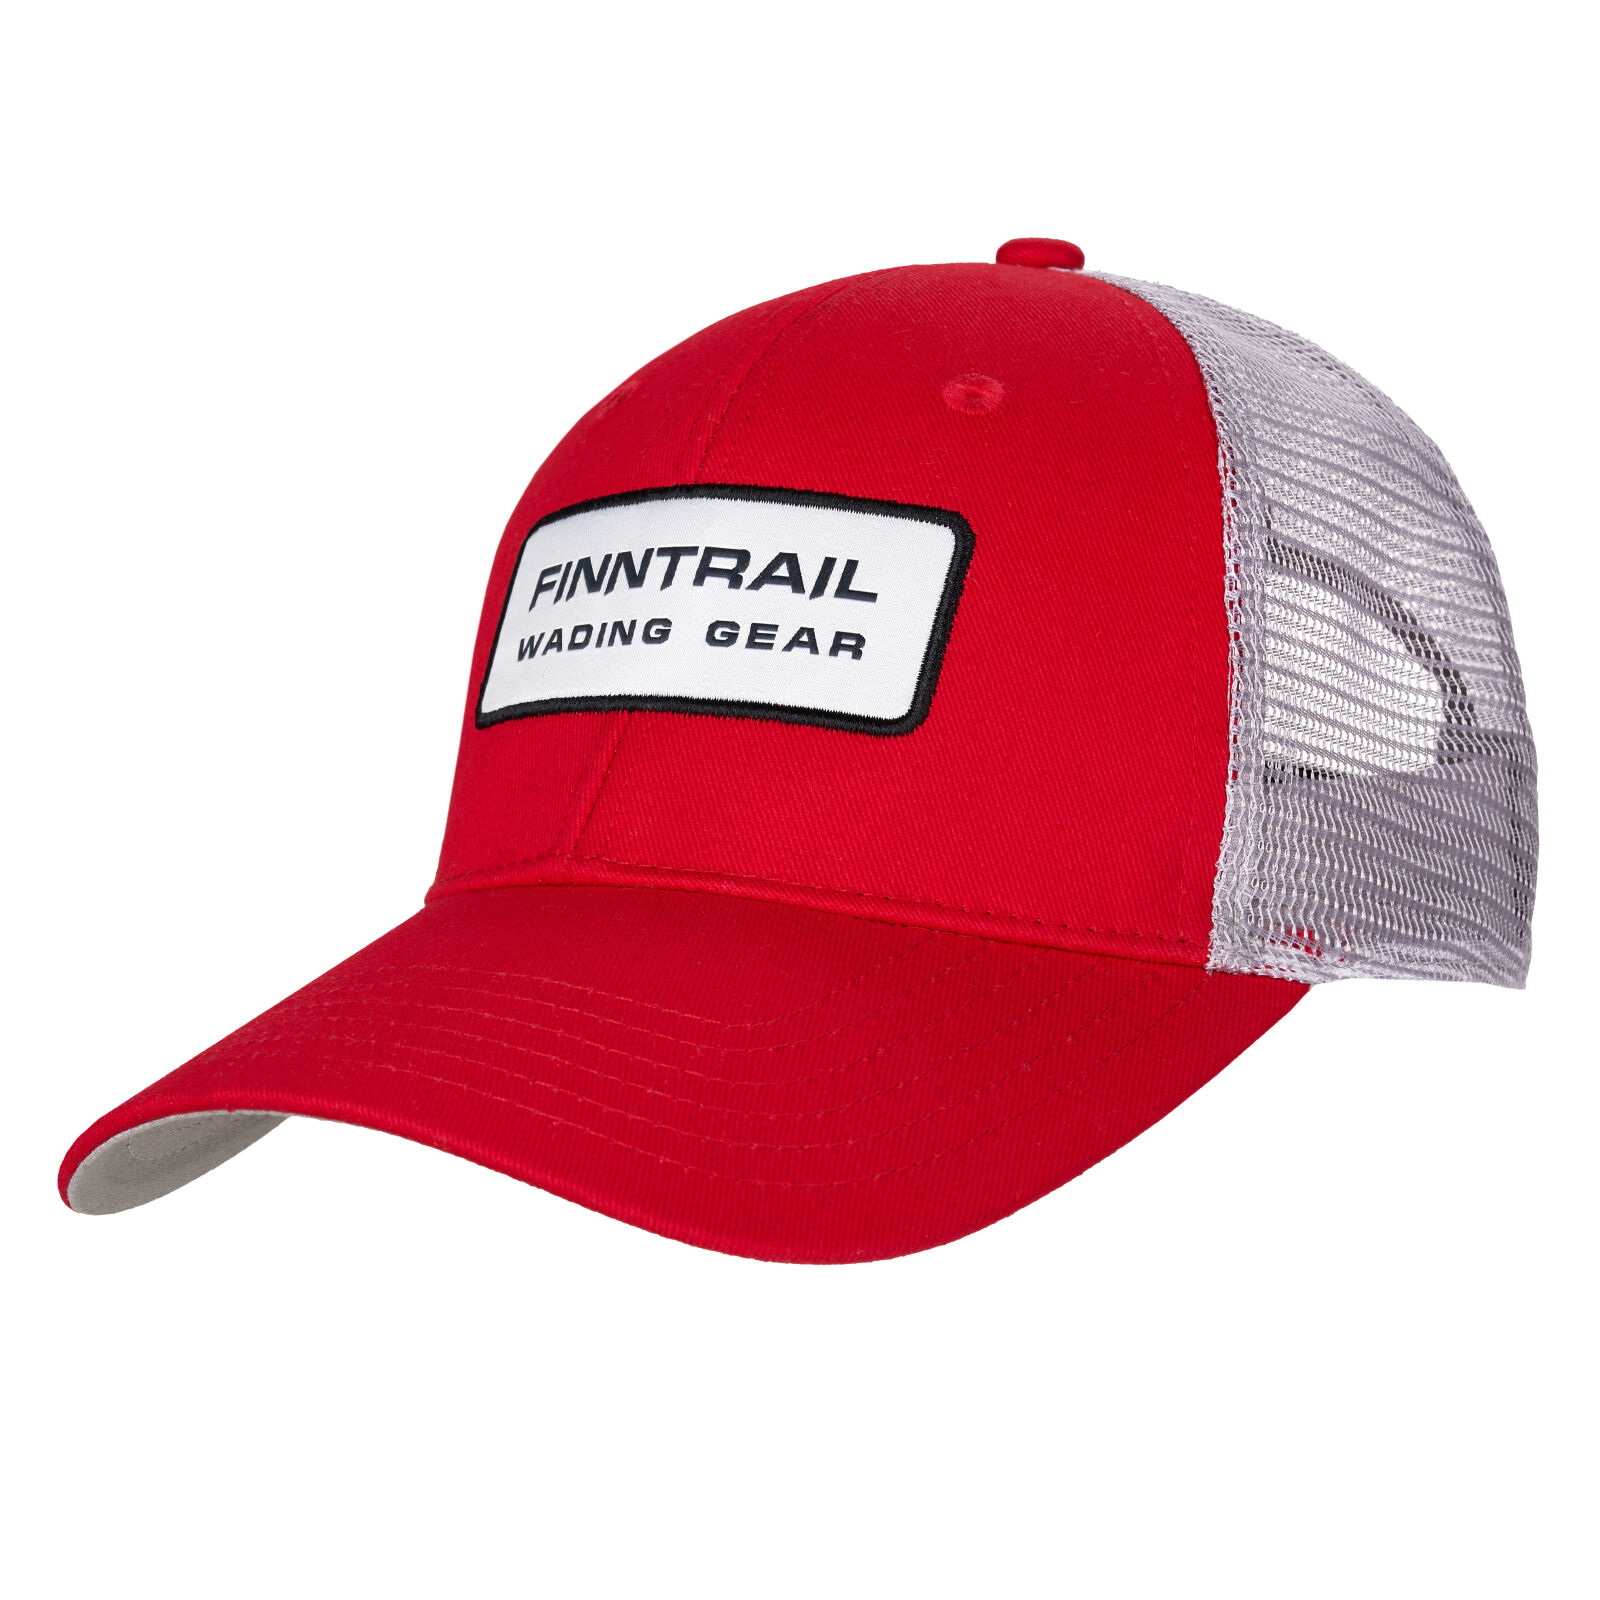 Finntrail Cap Red